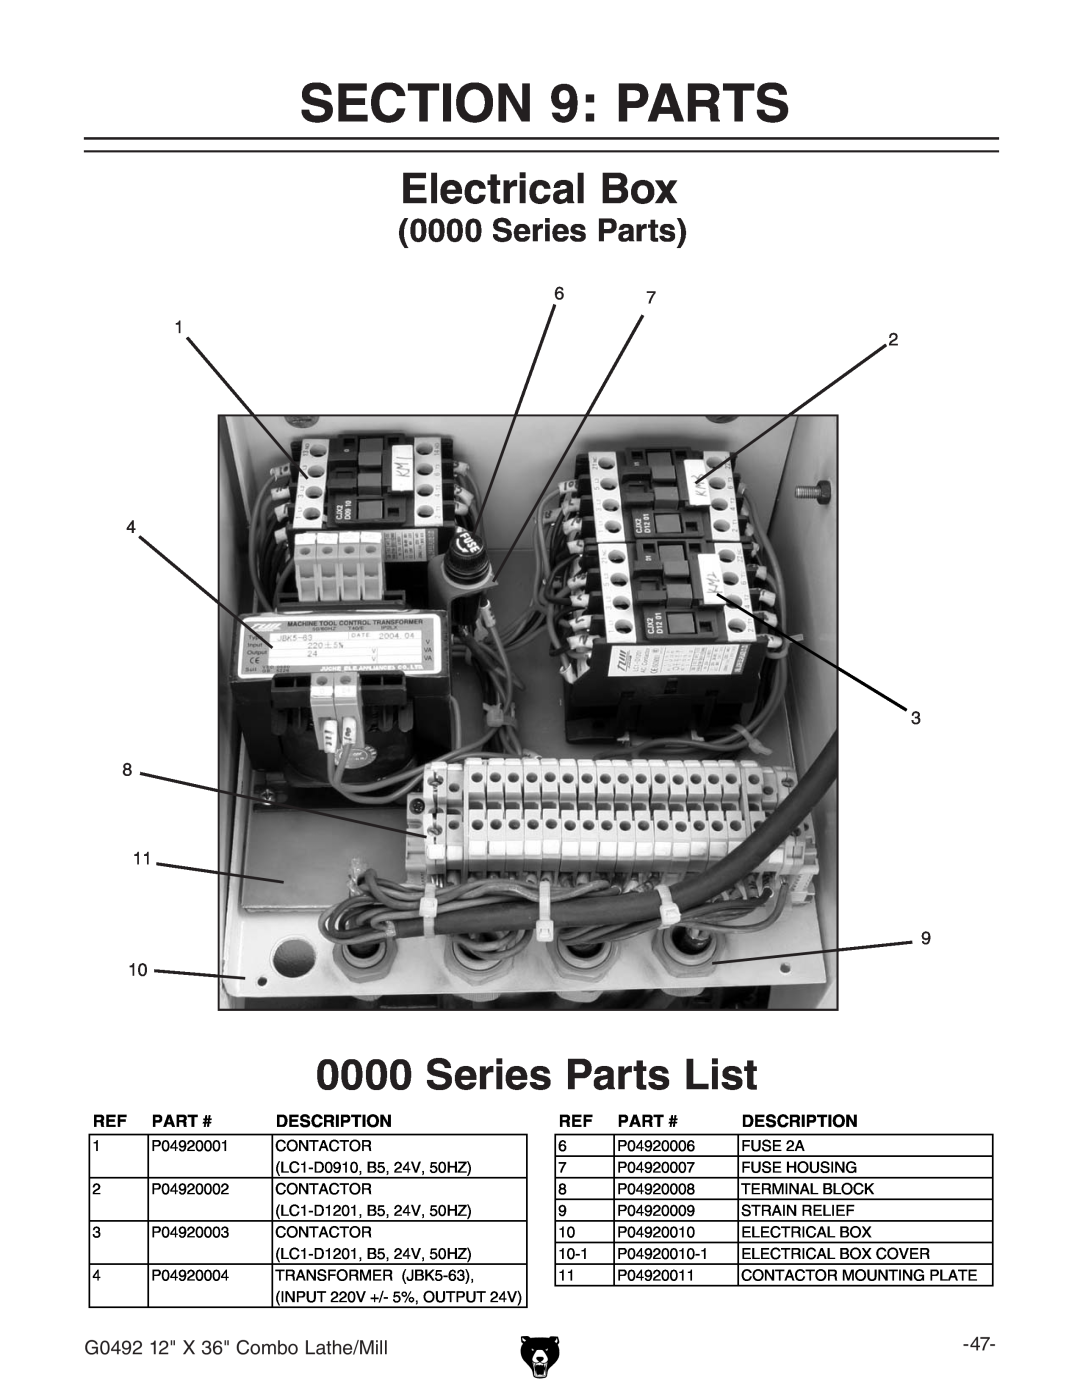 Grizzly G0492 manual Electrical Box, Series Parts List, &M+8dbWdAViZ$Baa, Part #, Description 